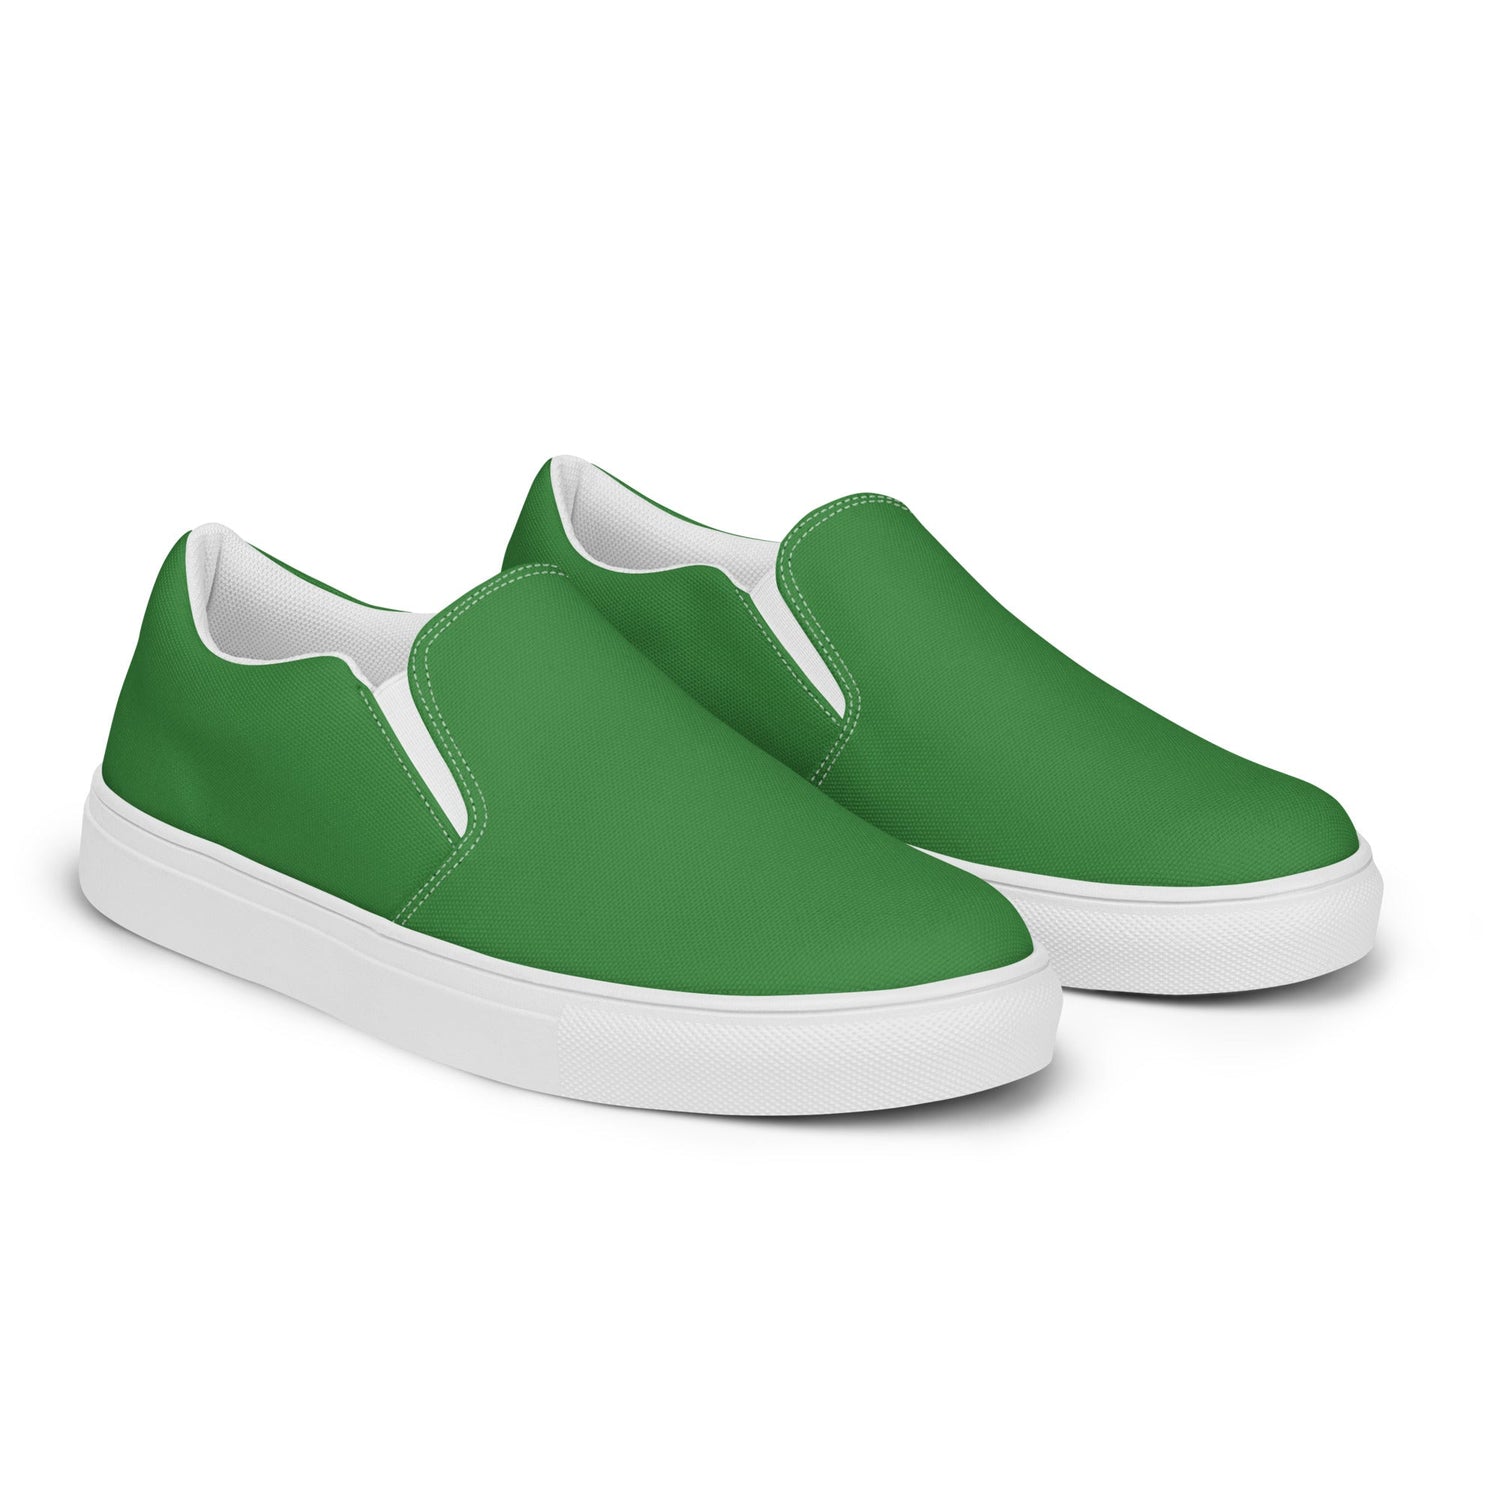 klasneakers Women’s slip-on canvas shoes - Green